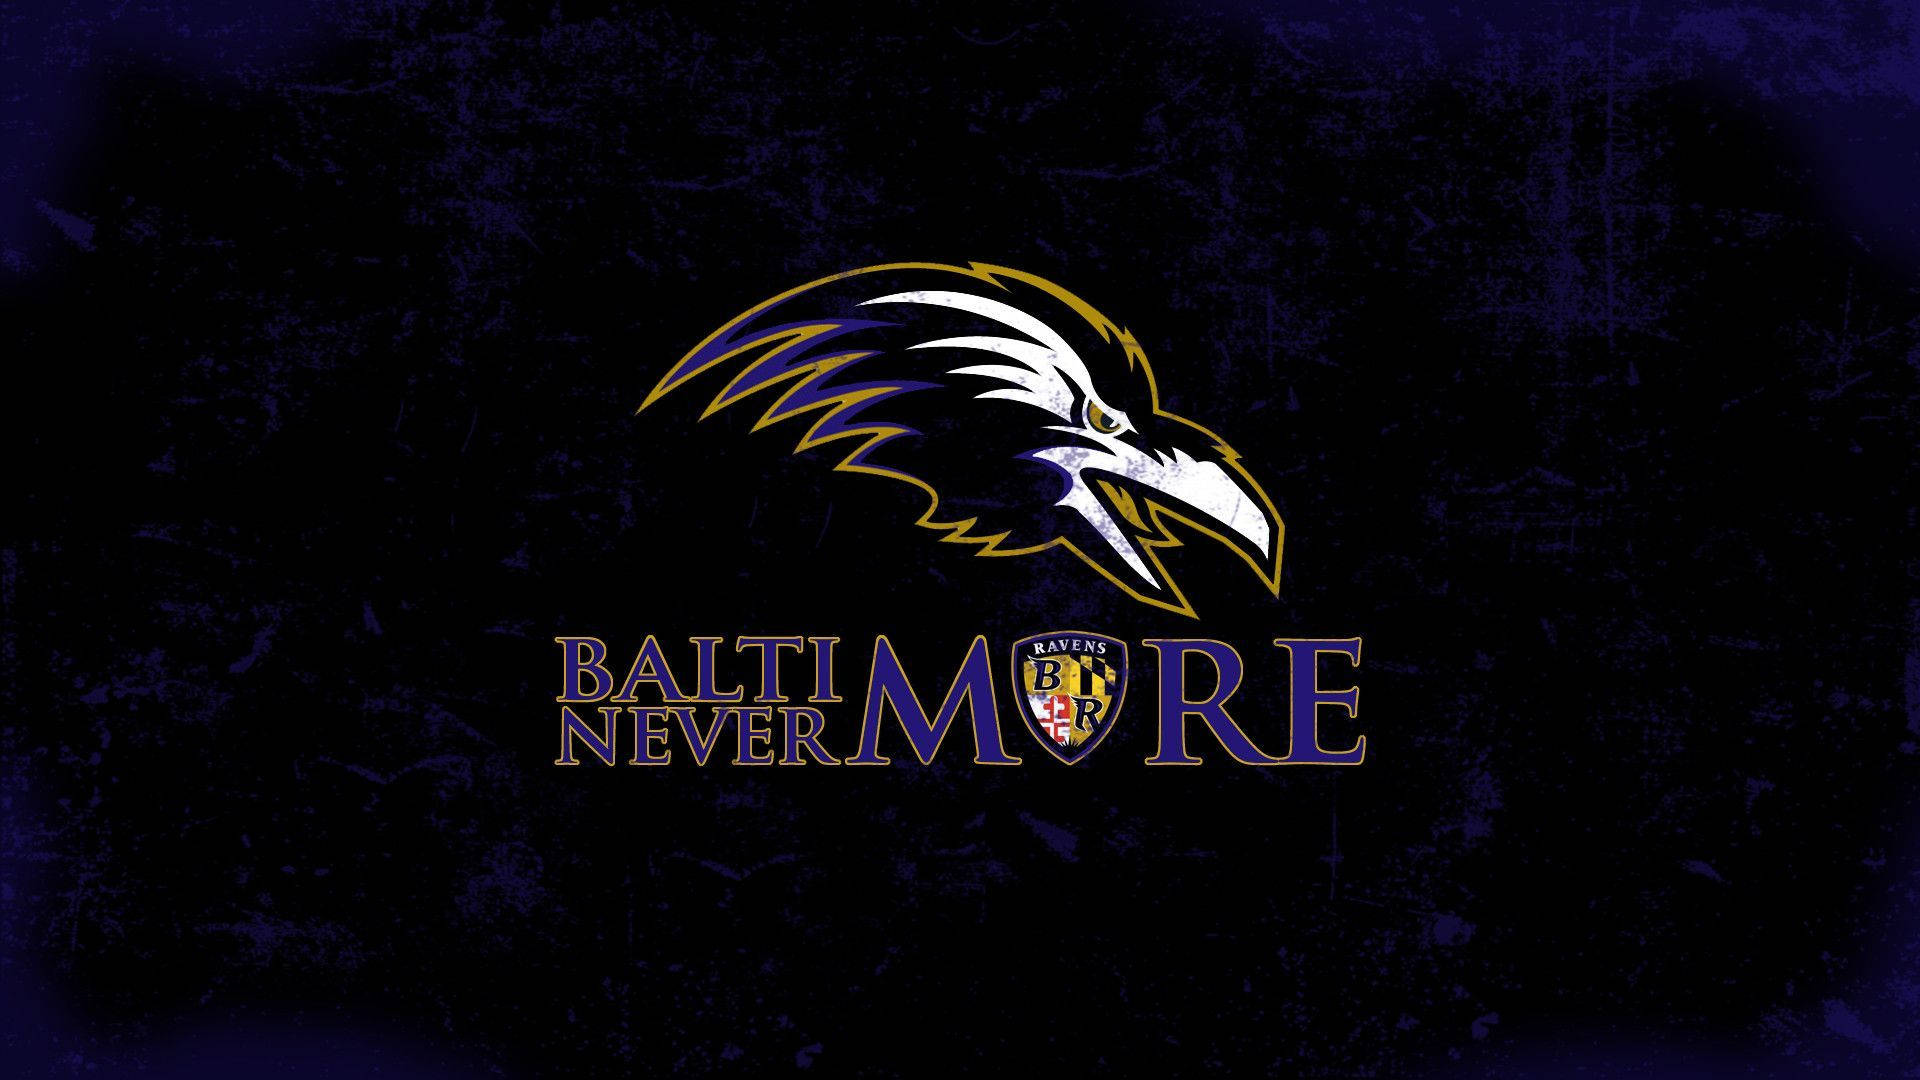 Baltimore Ravens Nevermore Poster